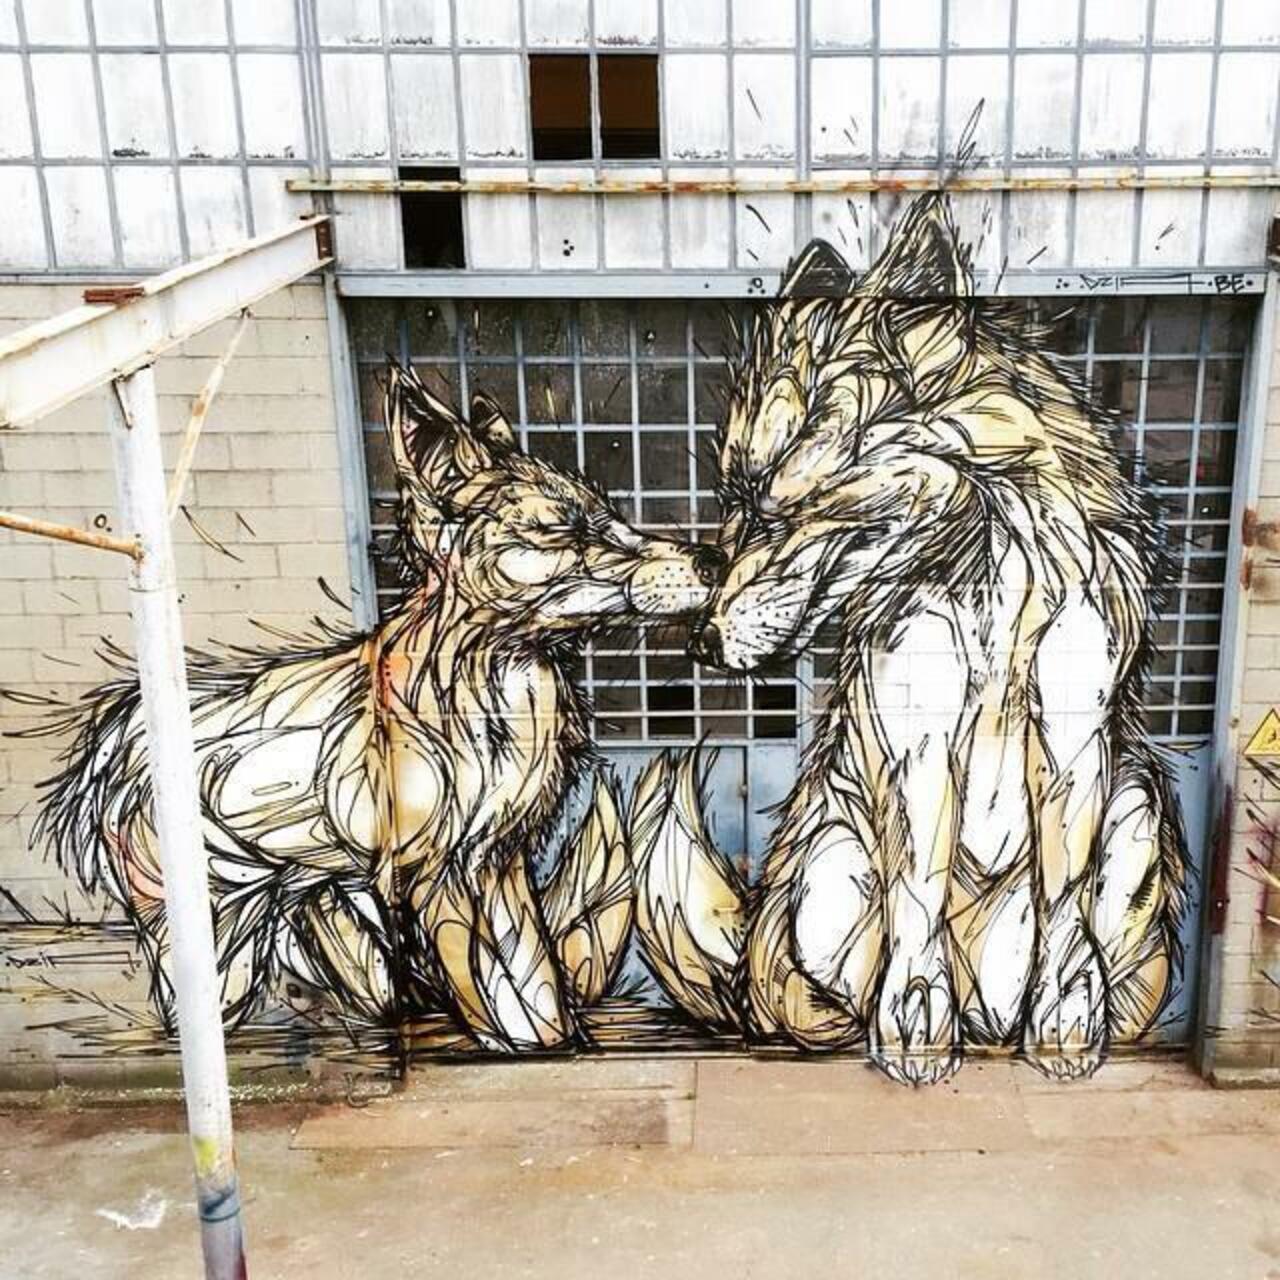 RT ArchaicManor "New Street Art by DZIA titled "Brothers" in Turin, Italy 

#art #arte #graffiti #streetart http://t.co/XRg1NiFmGC yo"